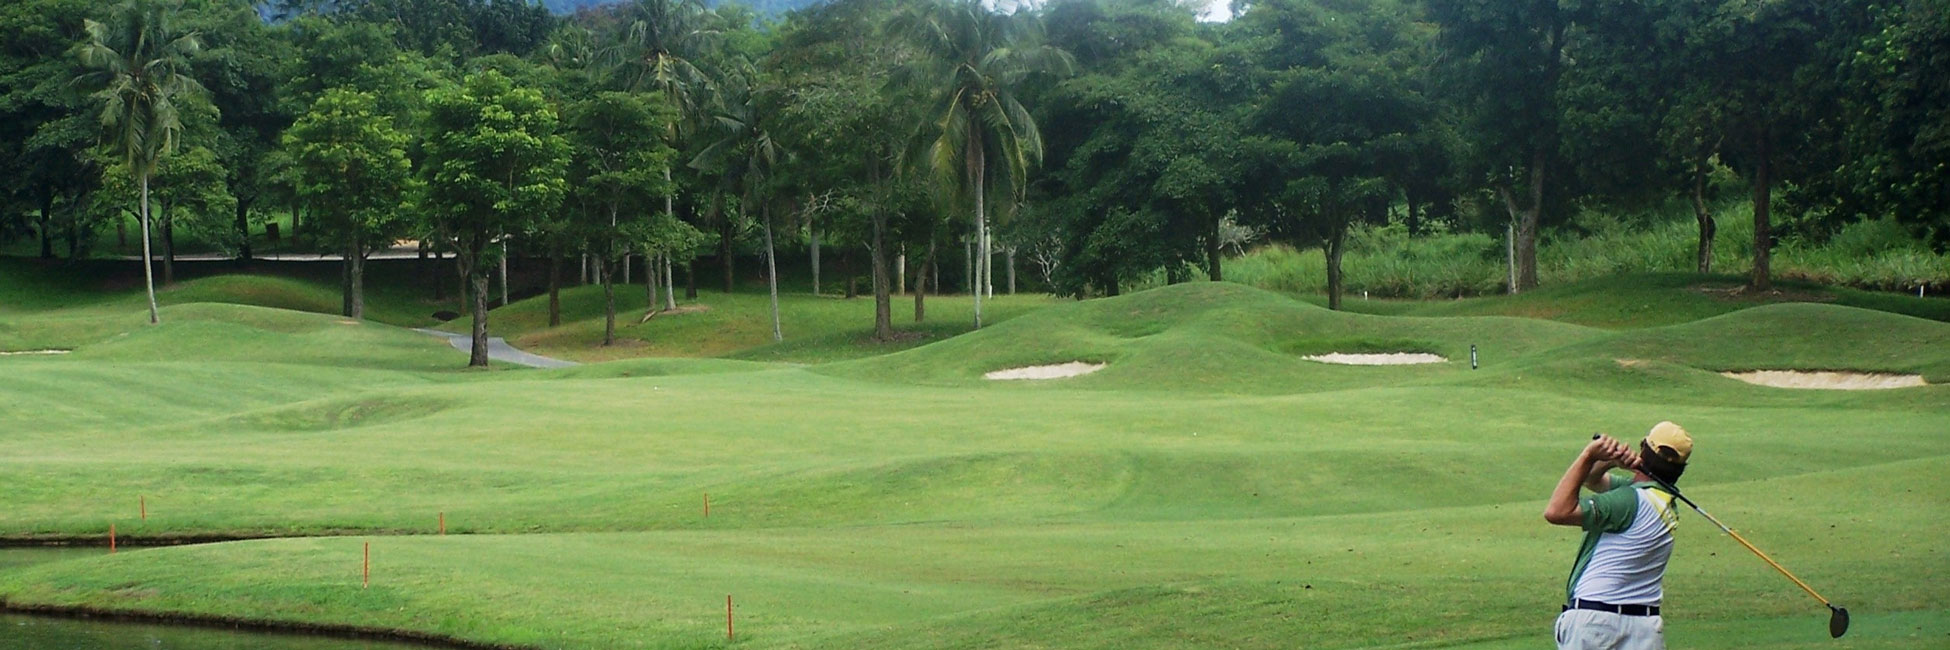 Tiara malacca golf course